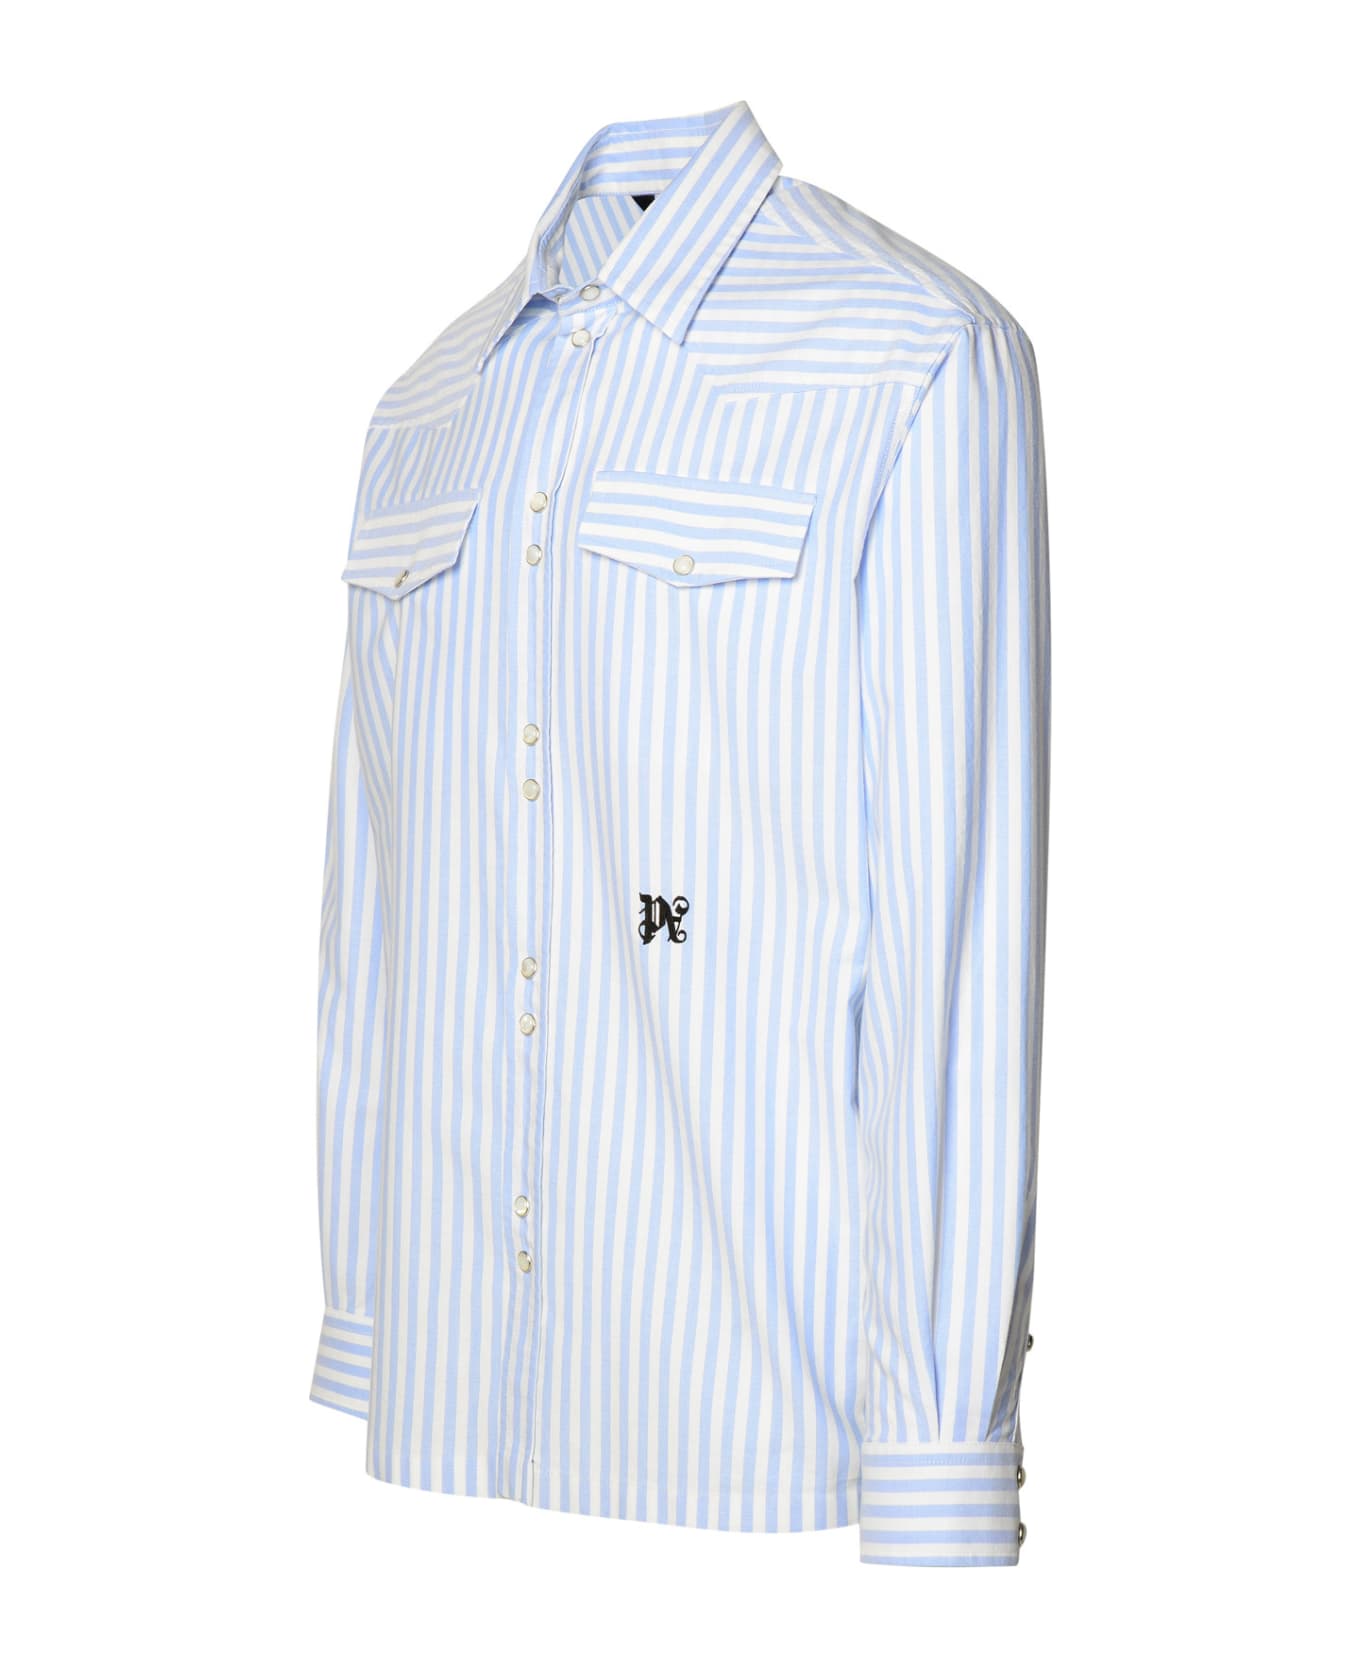 Palm Angels Light Blue Cotton Shirt - STIPES WHITE LIGHT BLUE シャツ